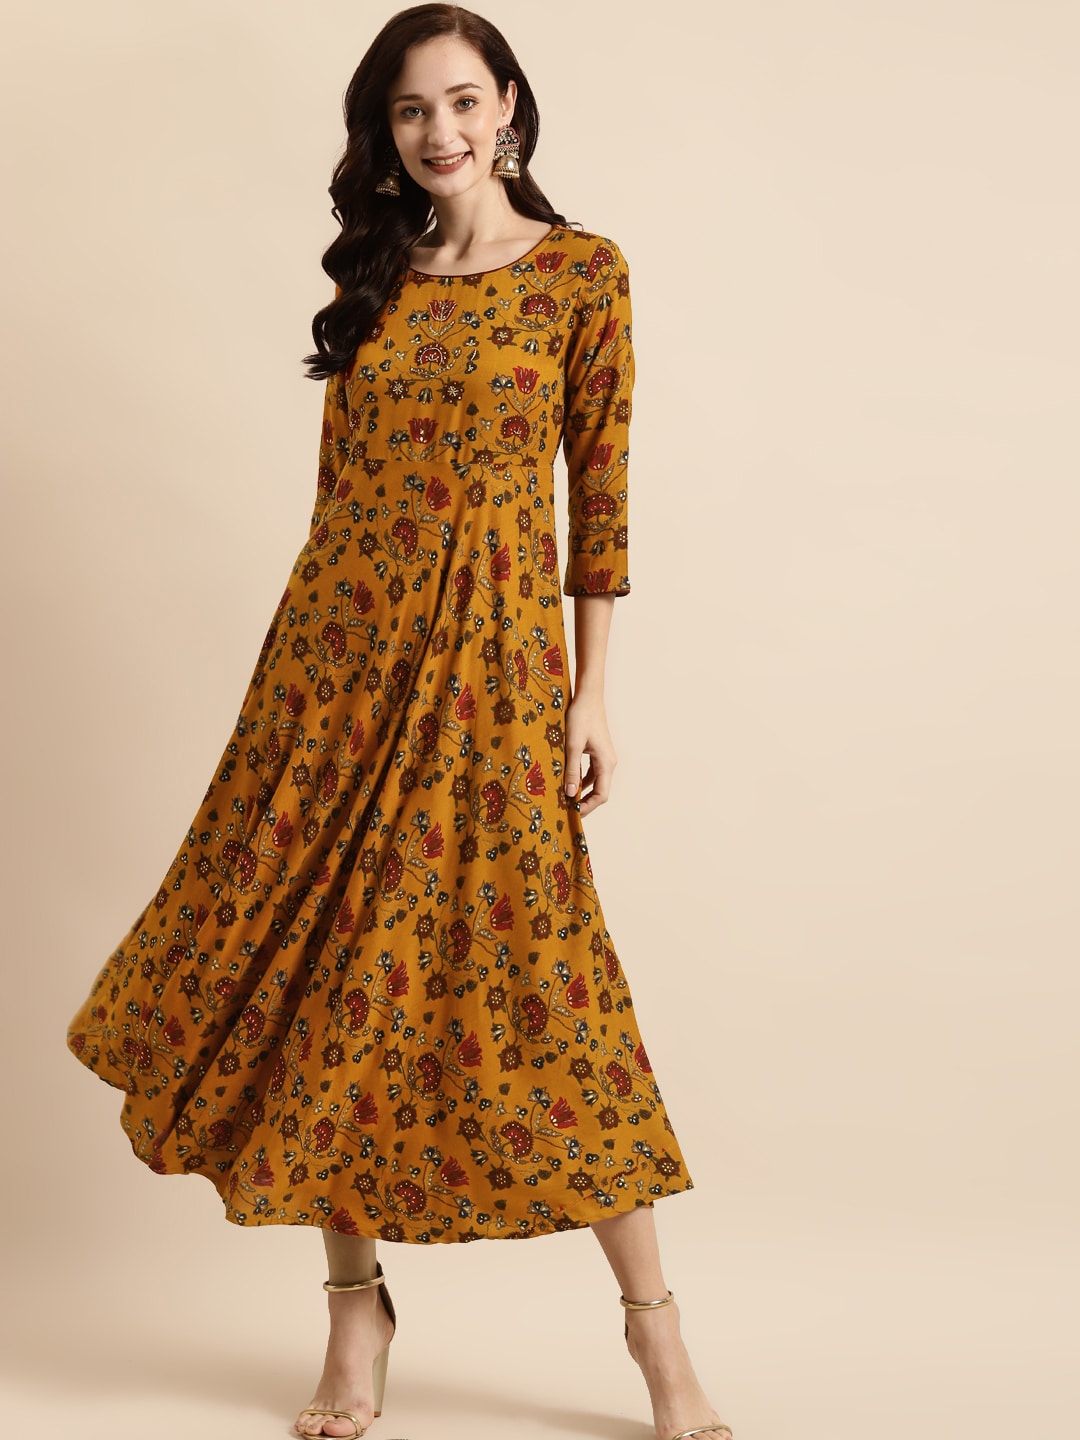 RANGMAYEE Mustard Yellow & Maroon Floral Liva Ethnic A-Line Maxi Dress Price in India